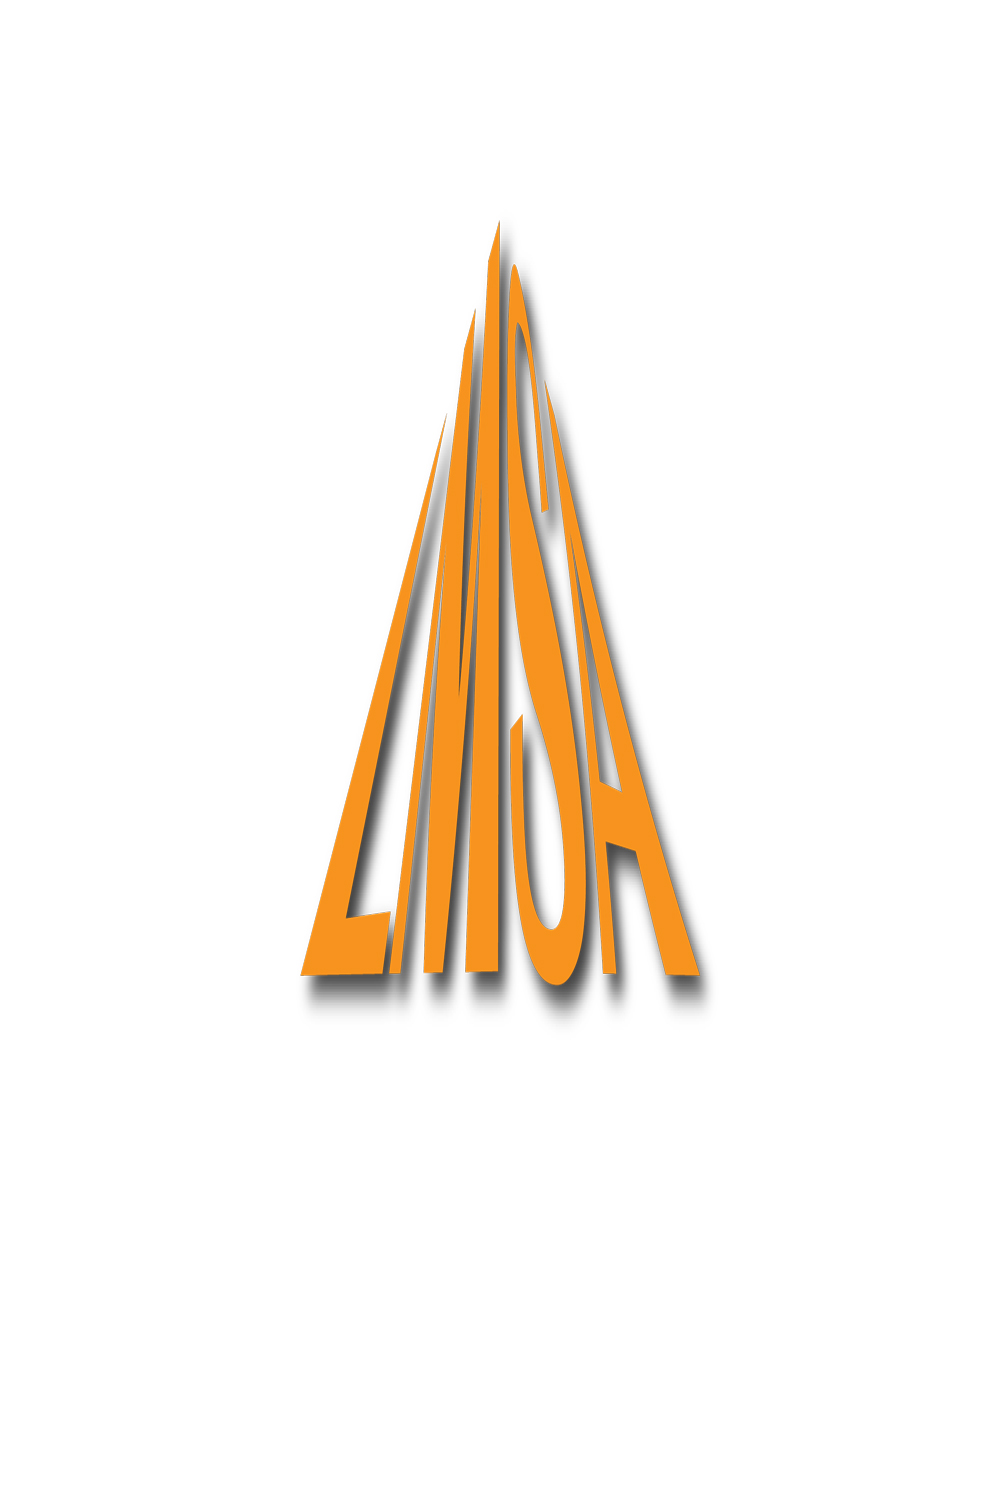 LMSA Letter - Logo pinterest preview image.